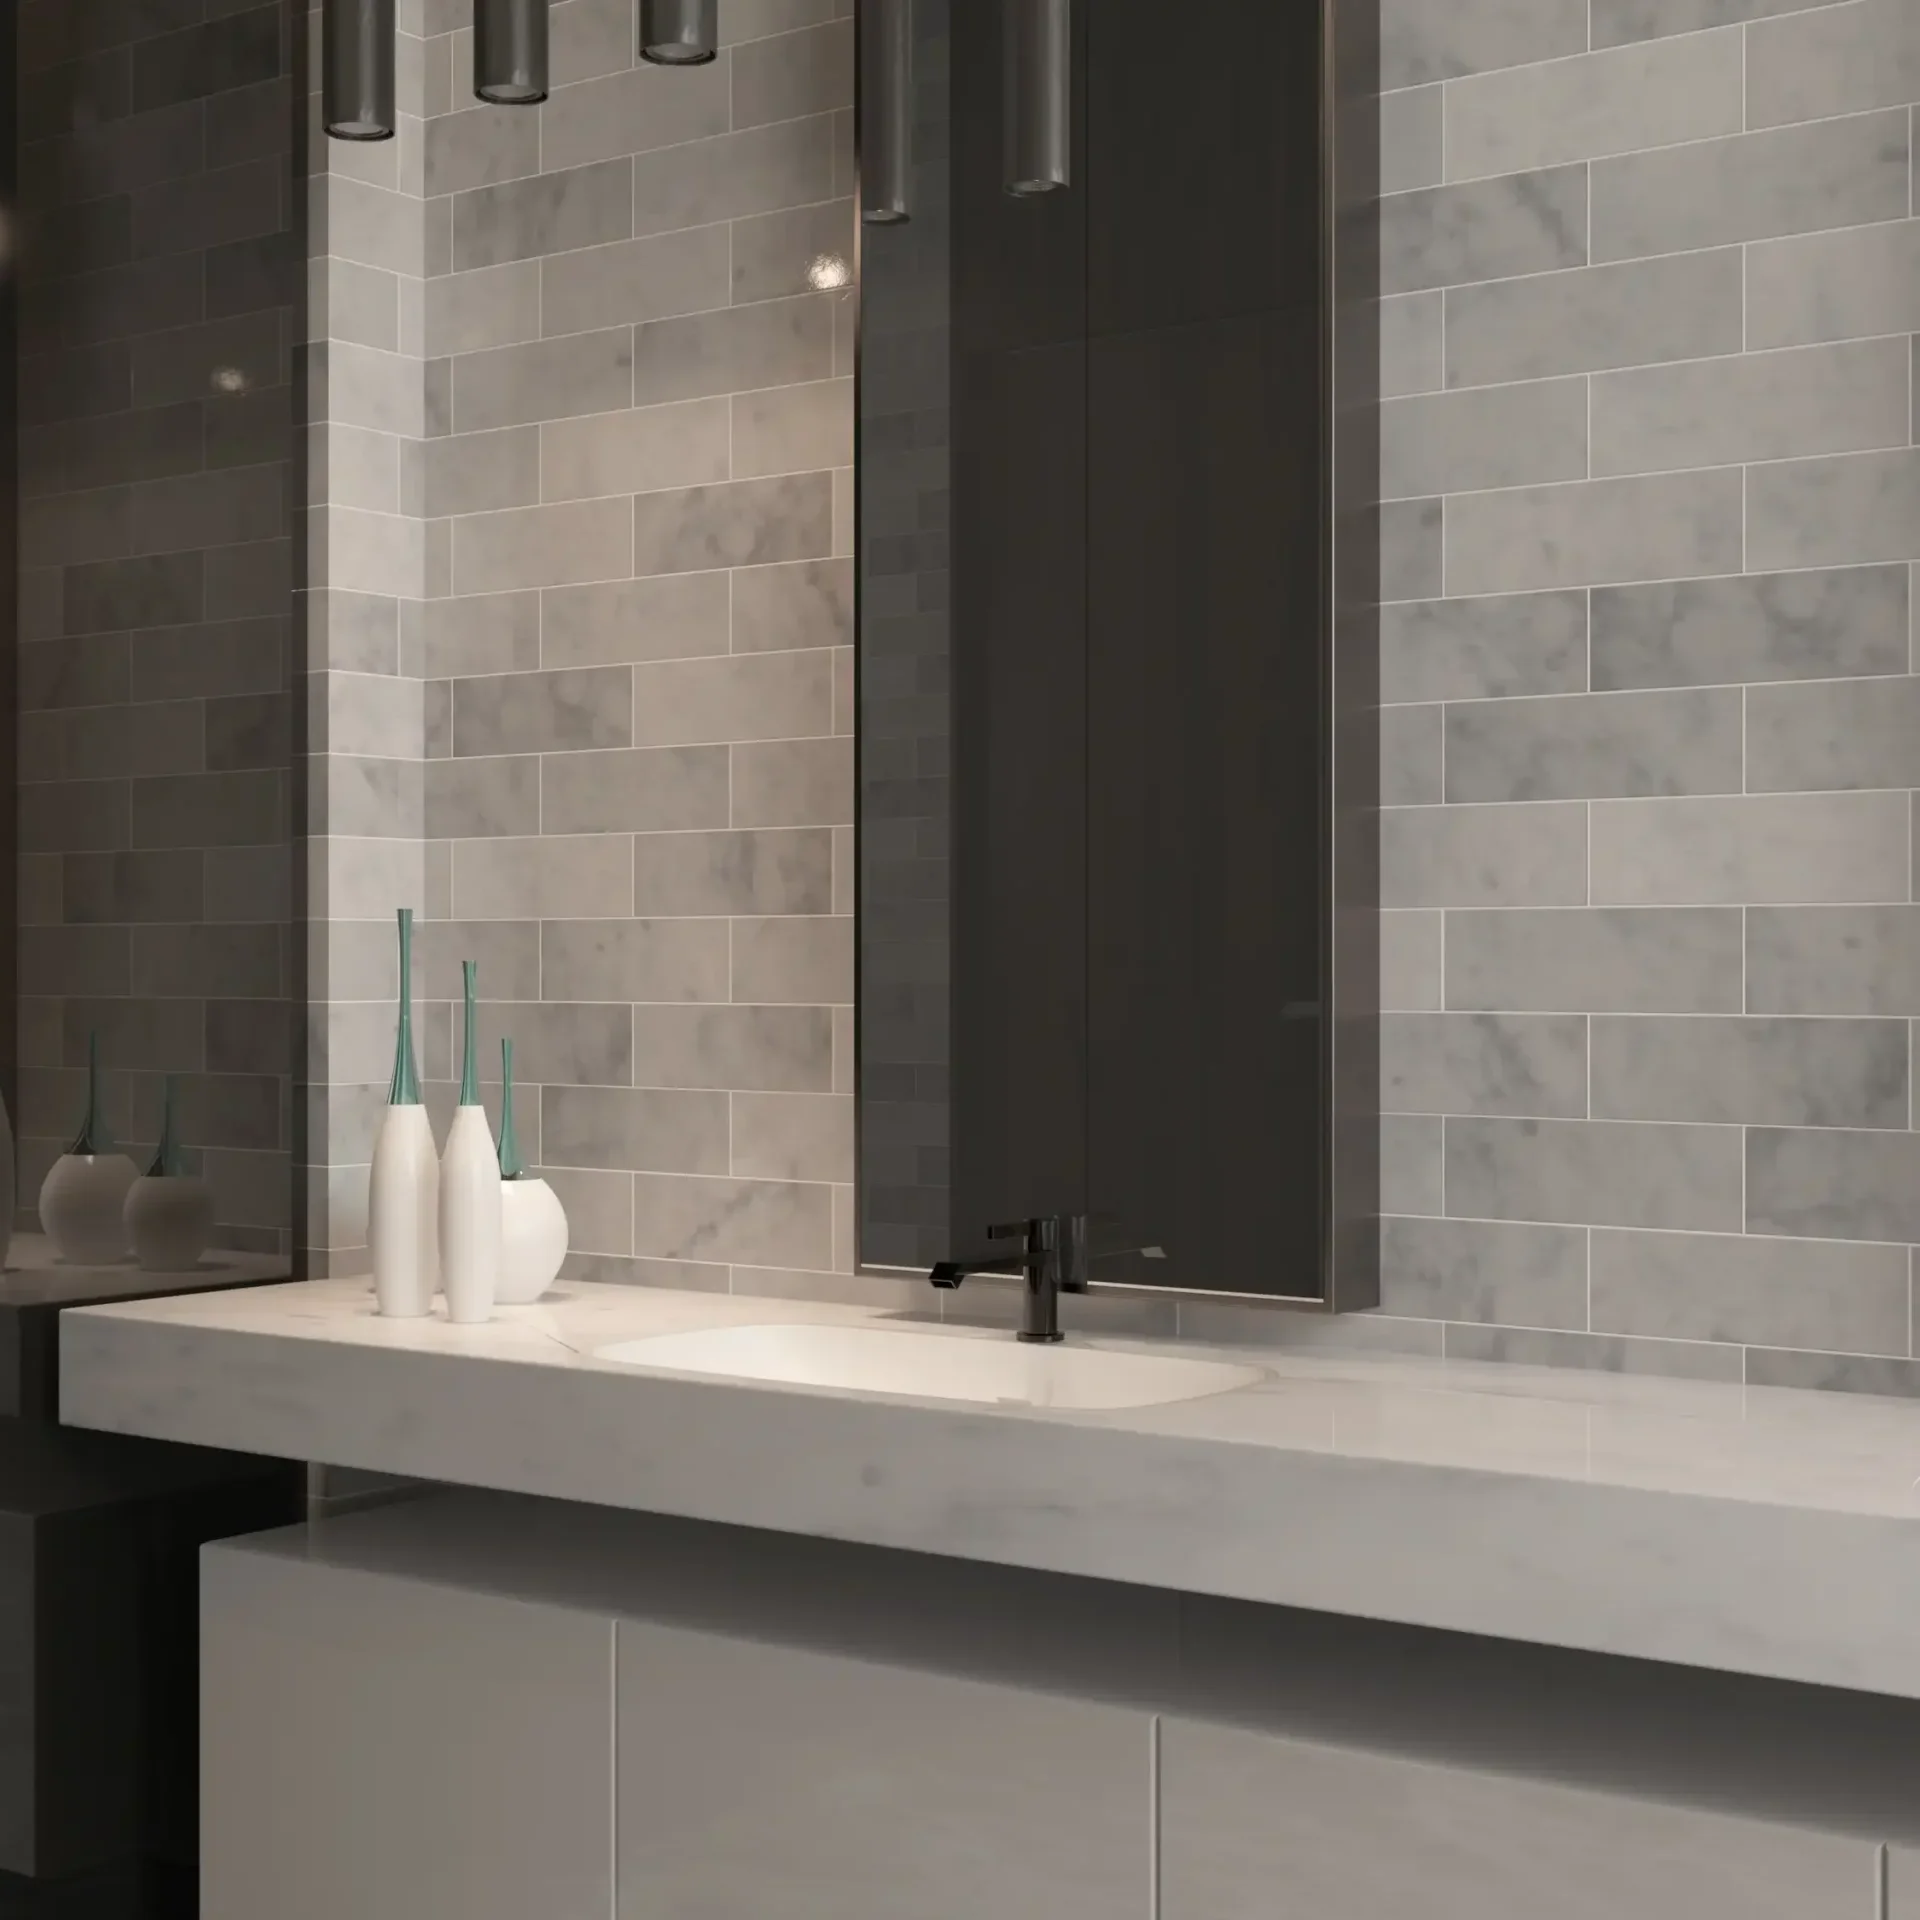 Image of bathroom backsplash with 4x12 Polished Subway Tile